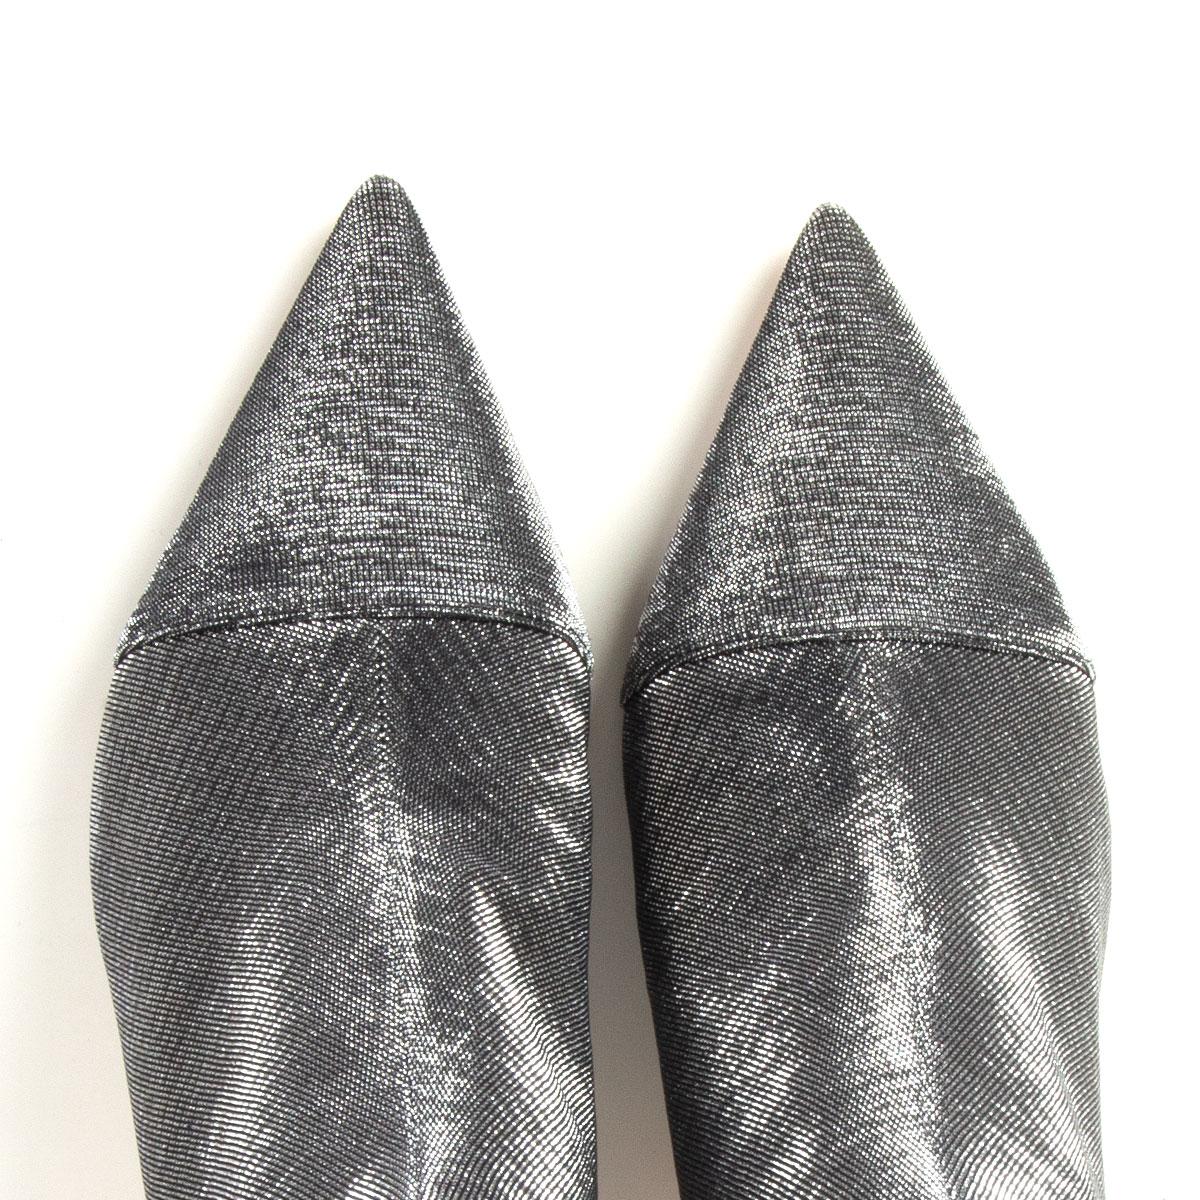 Black ALEXANDRE BIRMAN black & silver LAME KITTIE 50 Ankle Boots Shoes 38.5